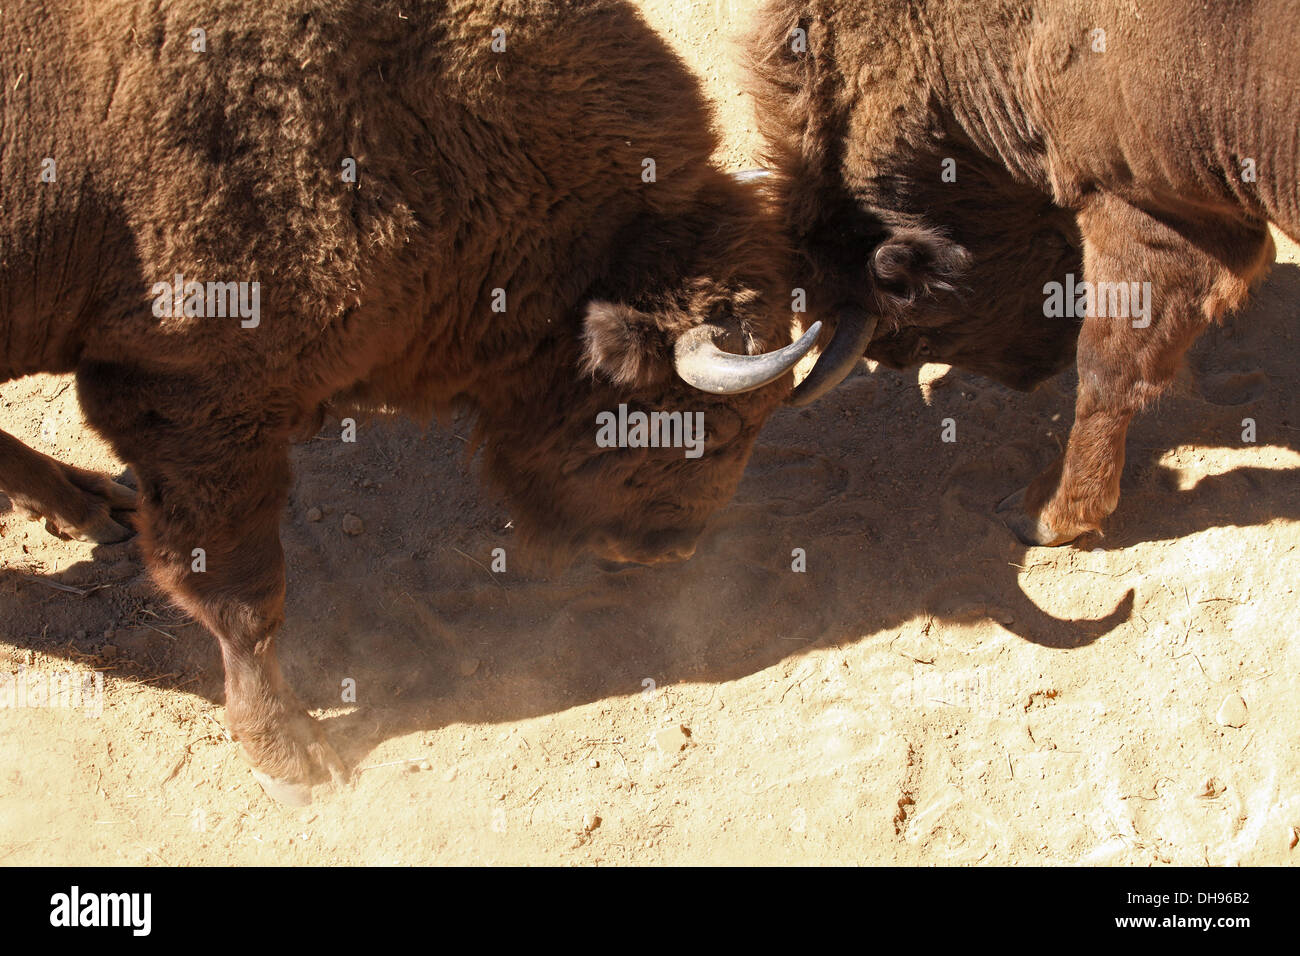 European bison (wisent), Bison bonasus. Location: Wisent reserve Lovce - Topolcianky, Tribec mountains, Slovakia. Stock Photo